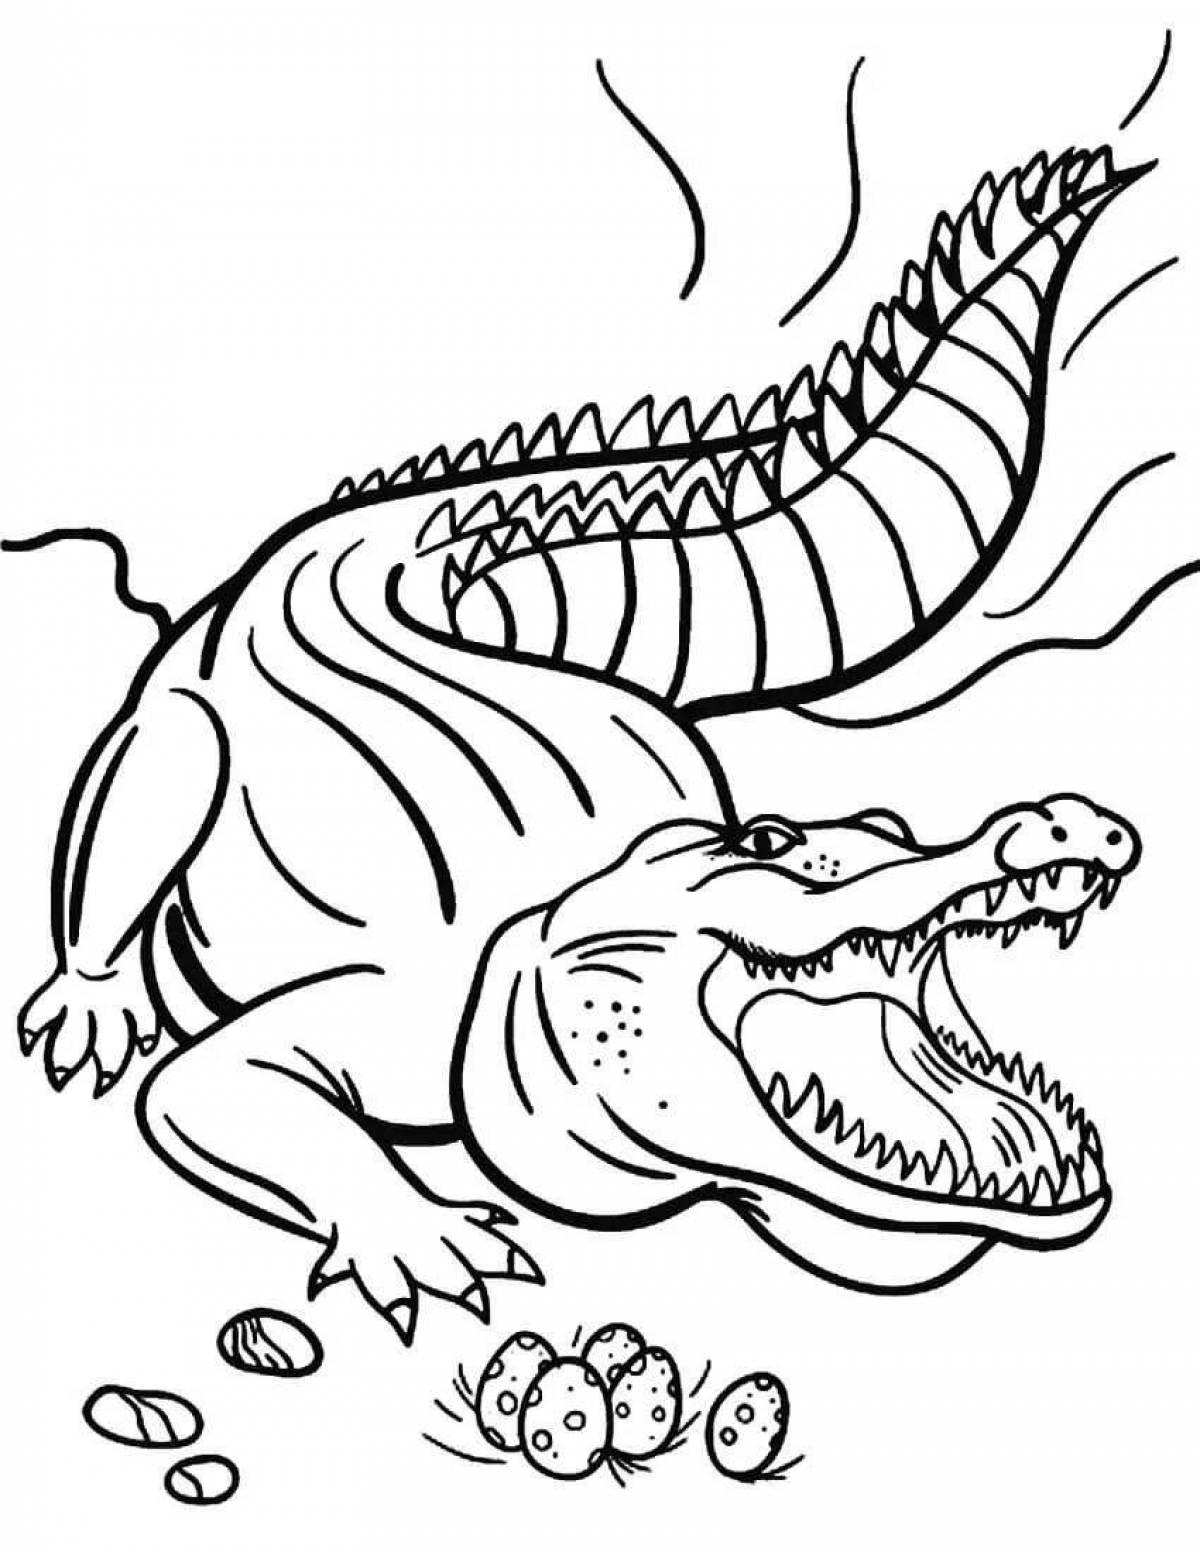 Impressive alligator coloring page